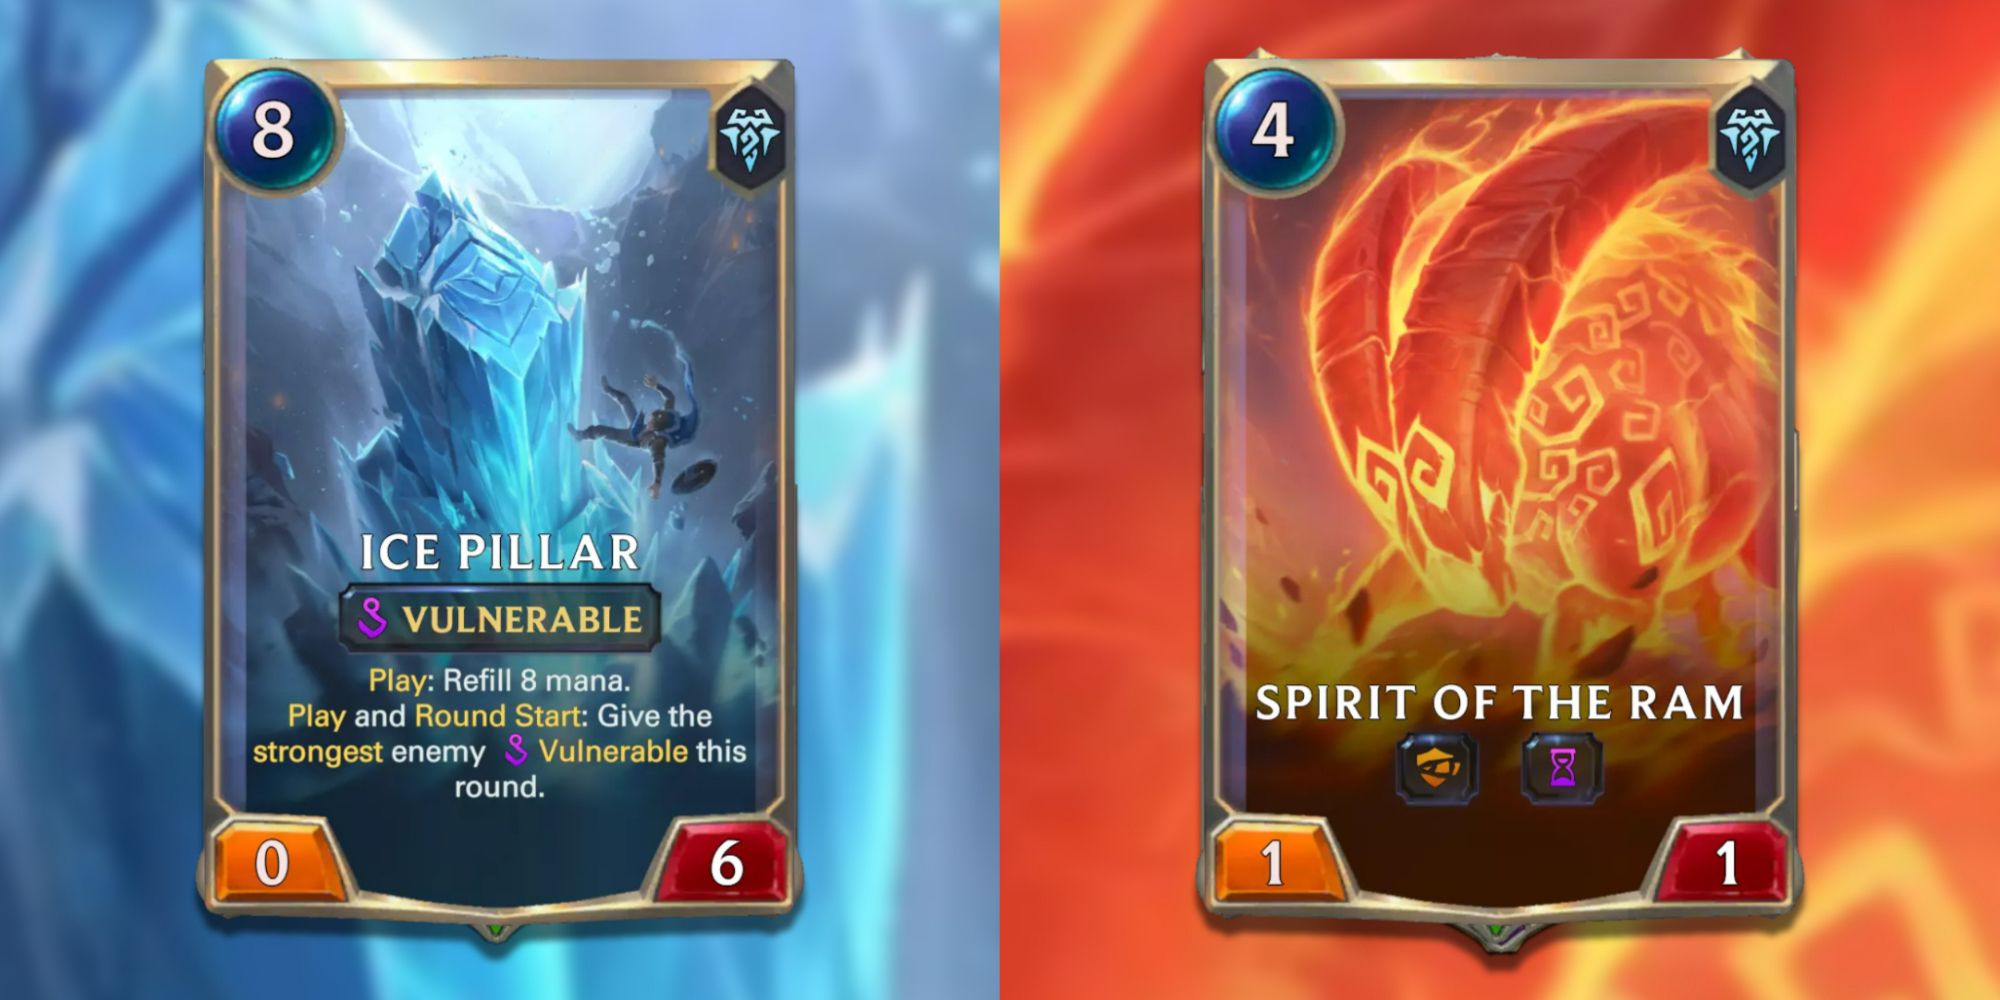 Legends of Runeterra split image of Ice pillar and spirit of the ram cards